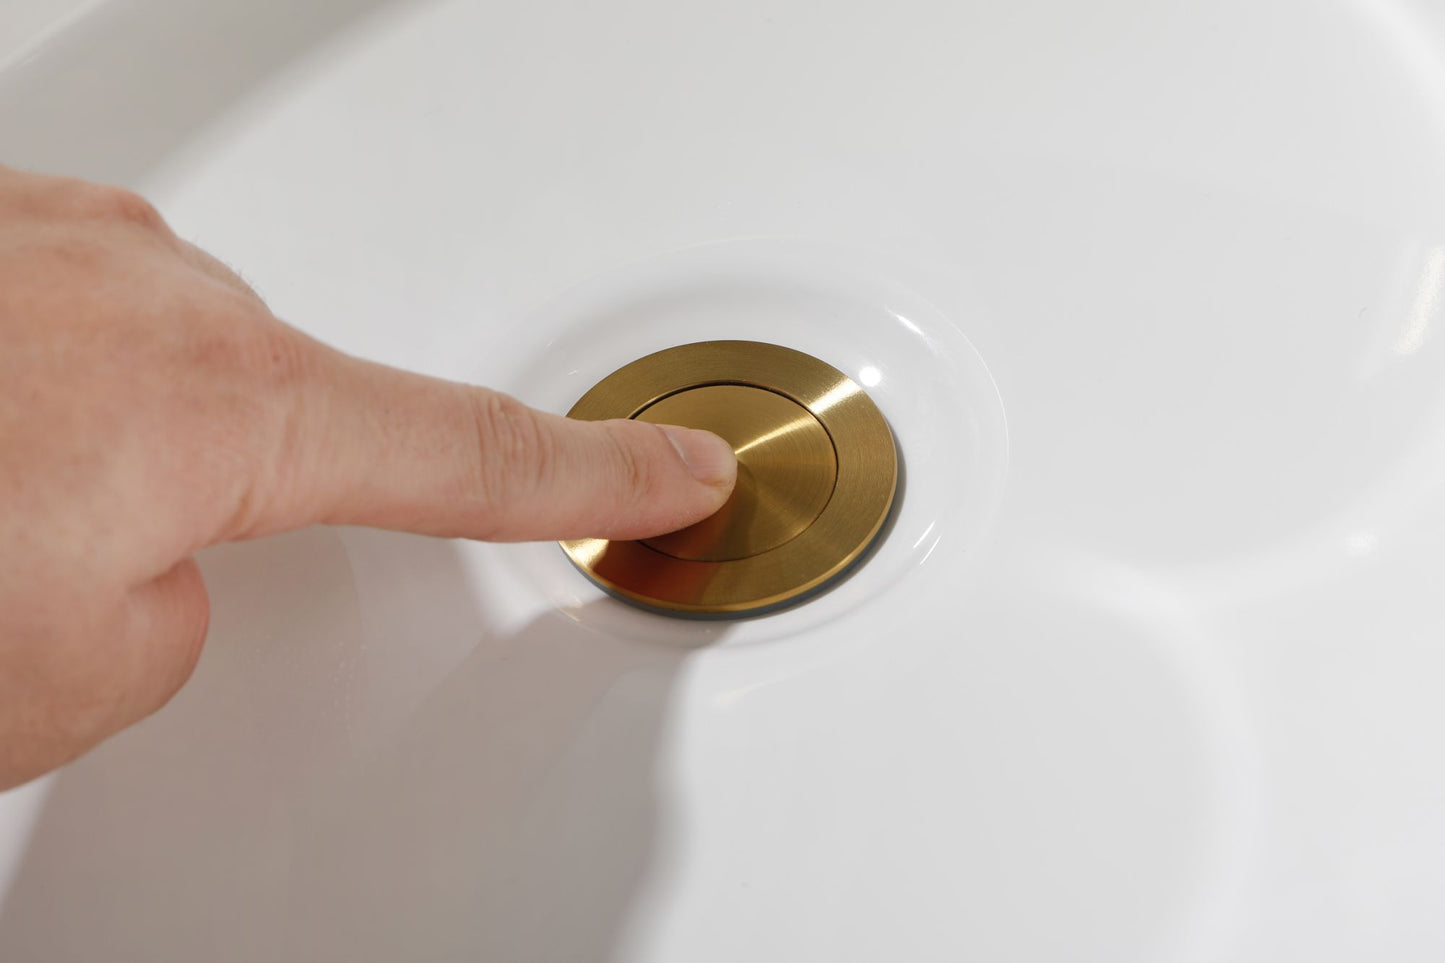 Gold Single Stem Faucet for Bathroom Vanity